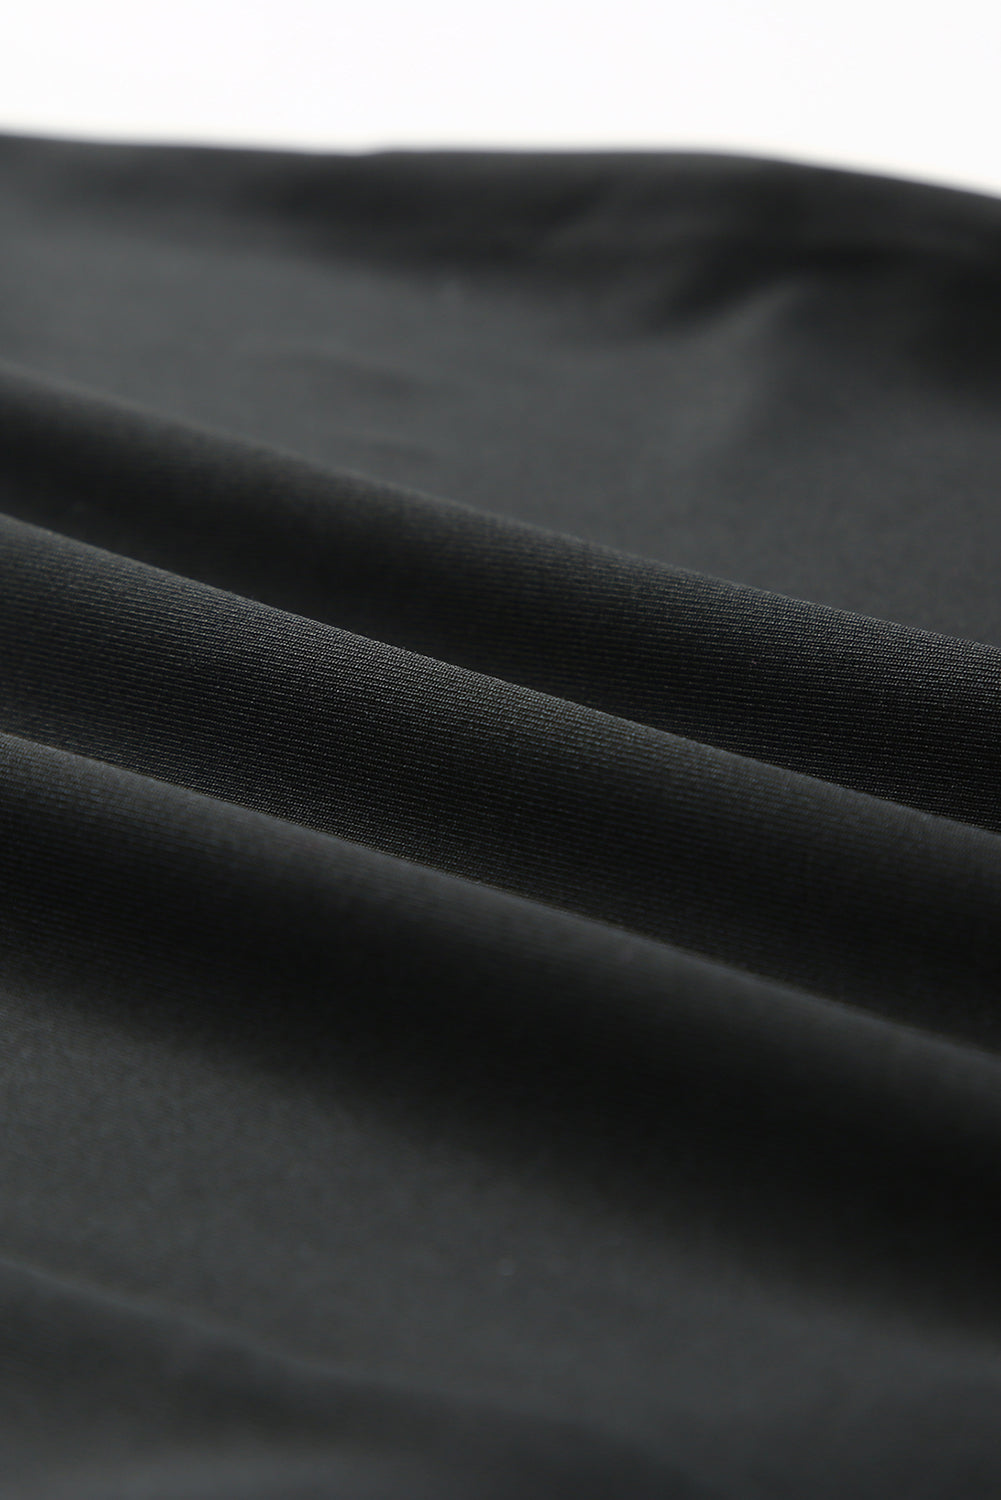 Black Wrap Ruched Short Sleeves Plus Size Mini Dress